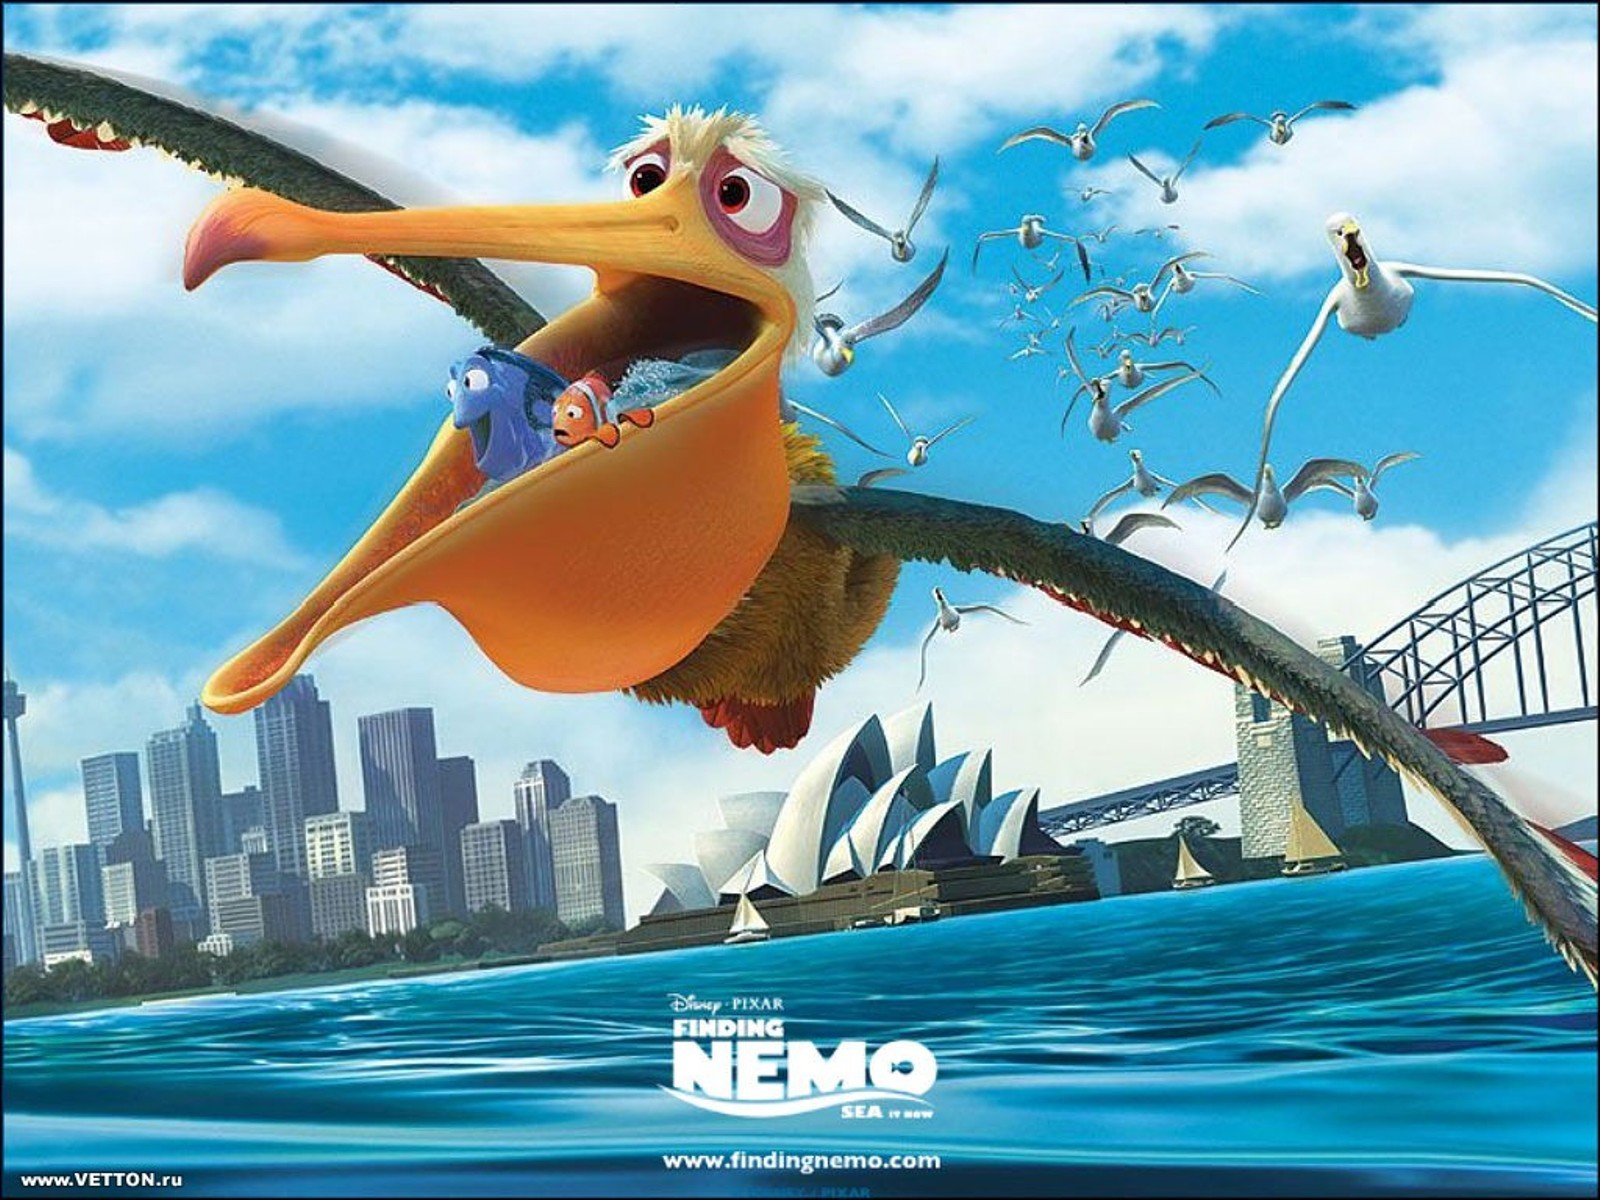 finding, Nemo, Animation, Underwater, Sea, Ocean, Tropical, Fish, Adventure, Family, Comedy, Drama, Disney, 1finding nemo, Bird, Pelican Wallpaper